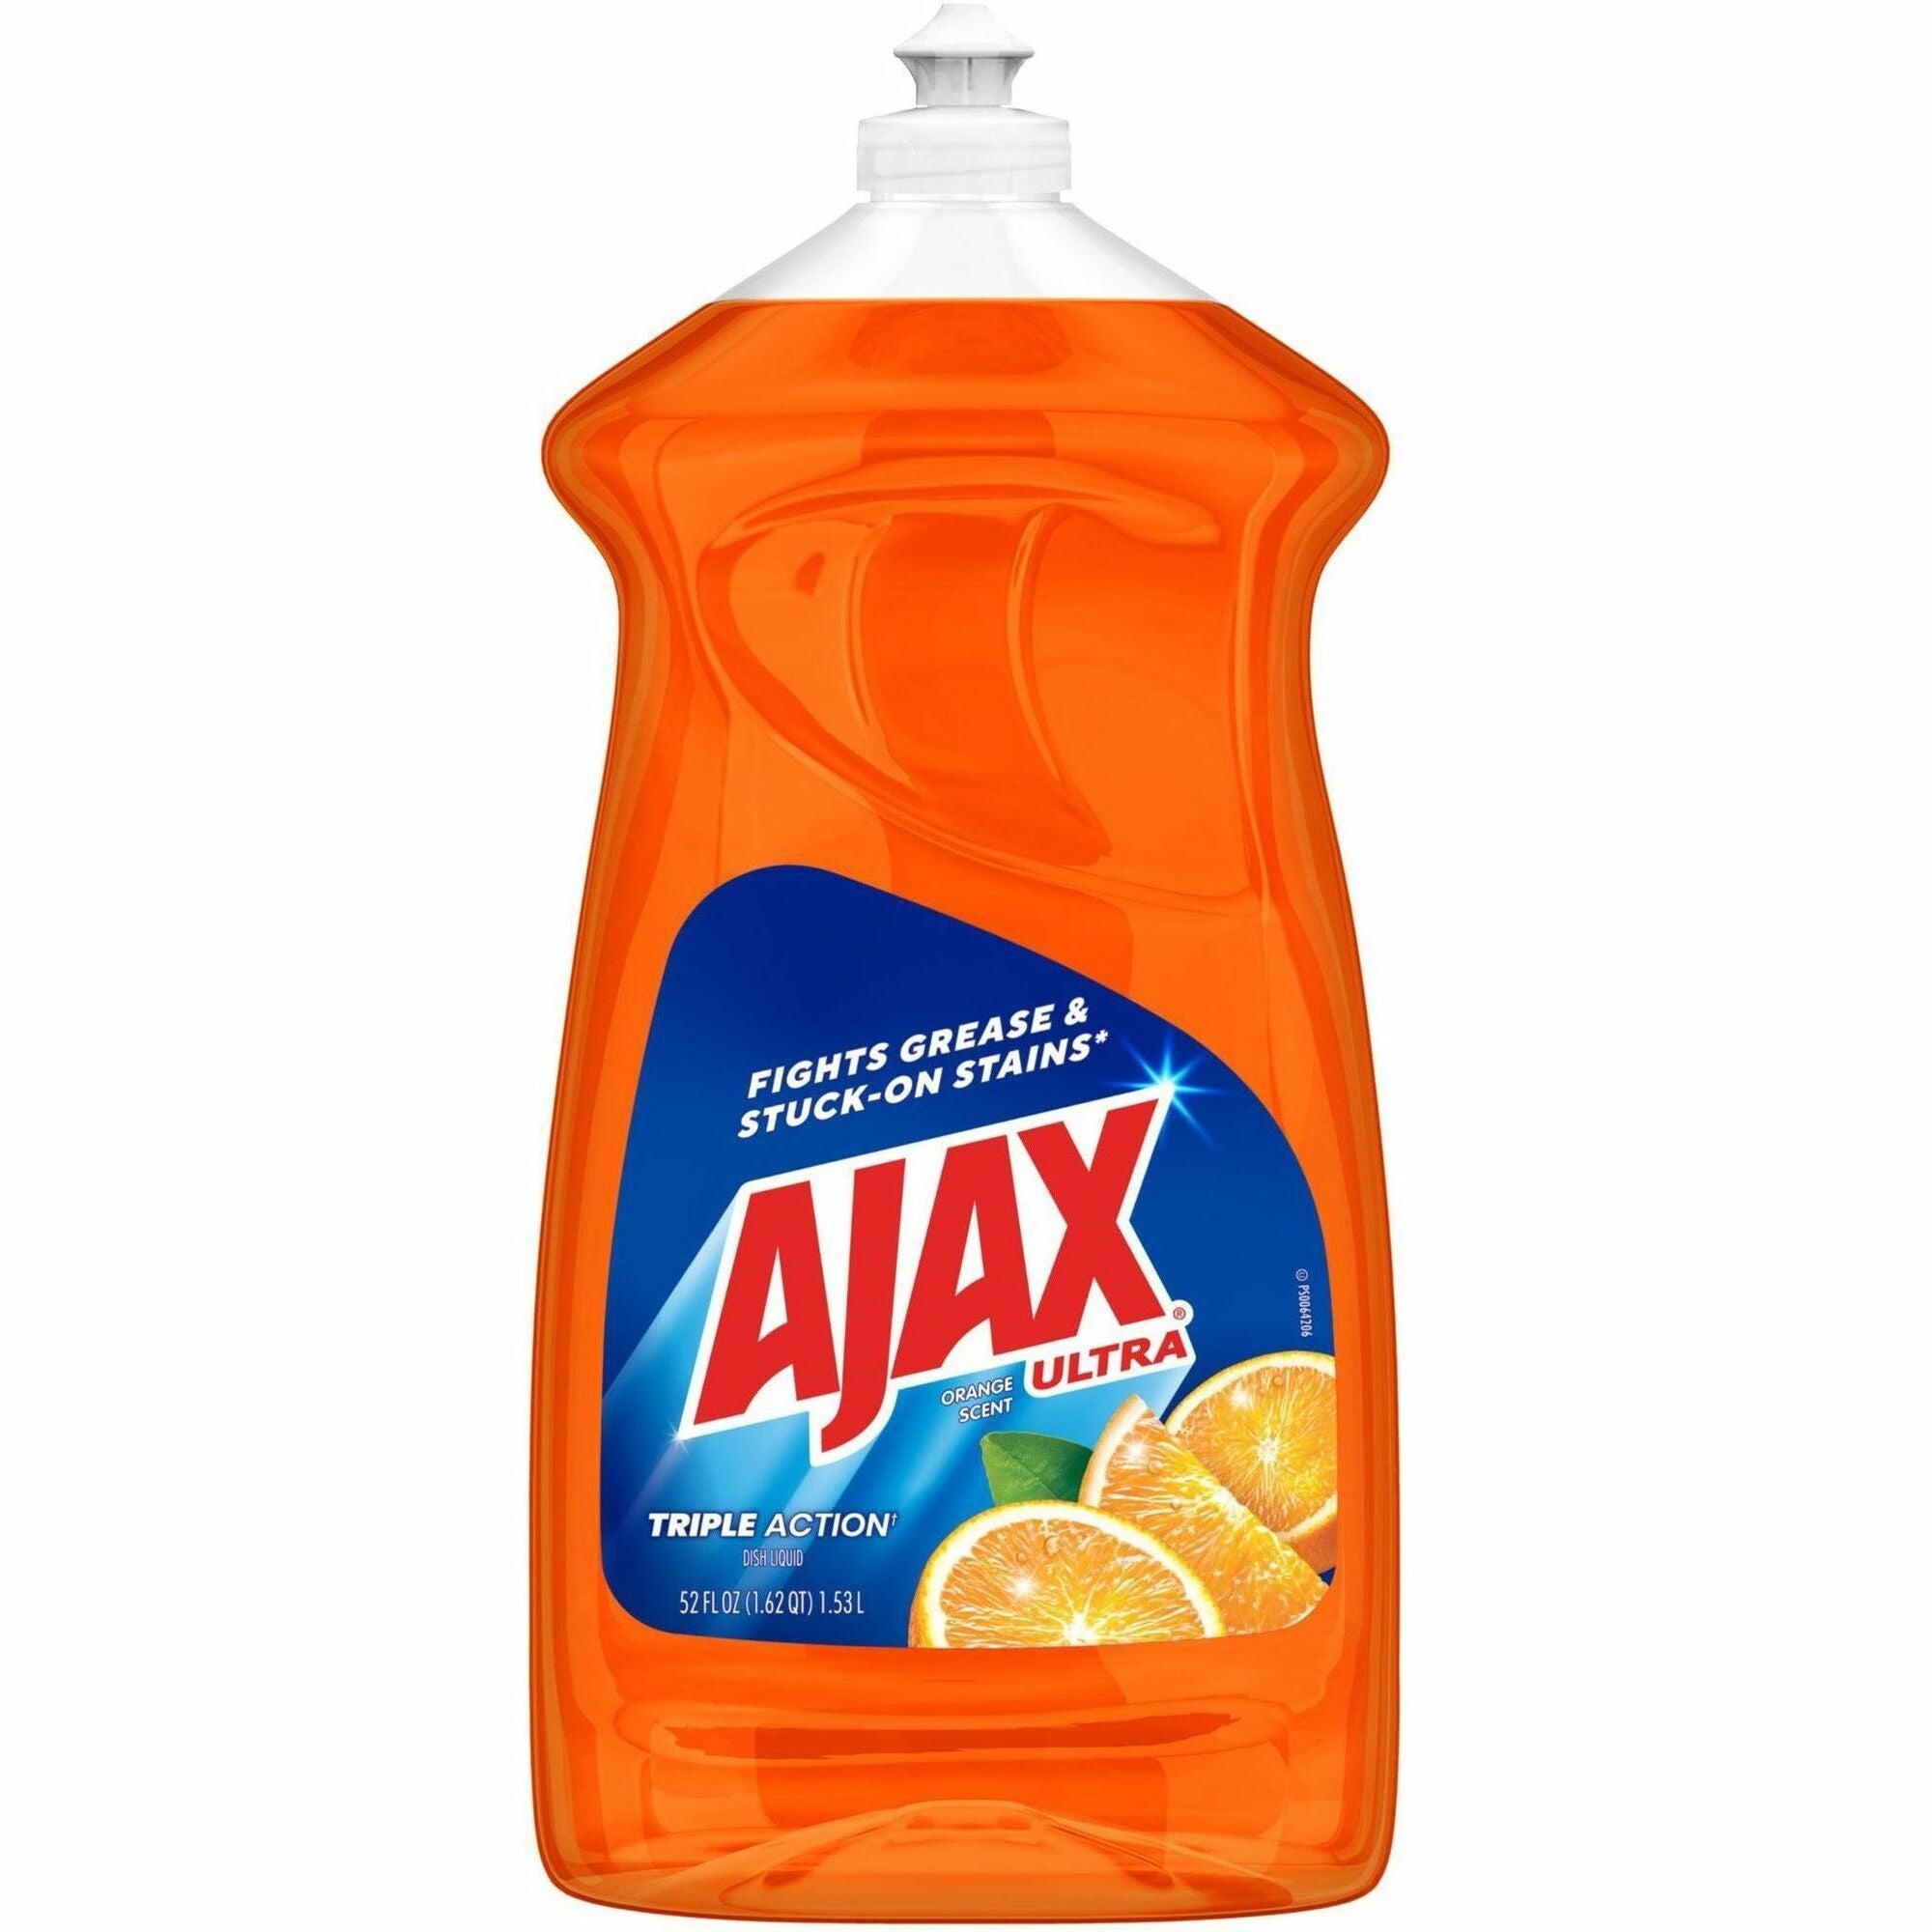 AJAX Triple Action Dish Soap - 52 fl oz (1.6 quart) - Orange Scent - 6 / Carton - Pleasant Scent, Phosphate-free, Kosher-free - Orange - 1